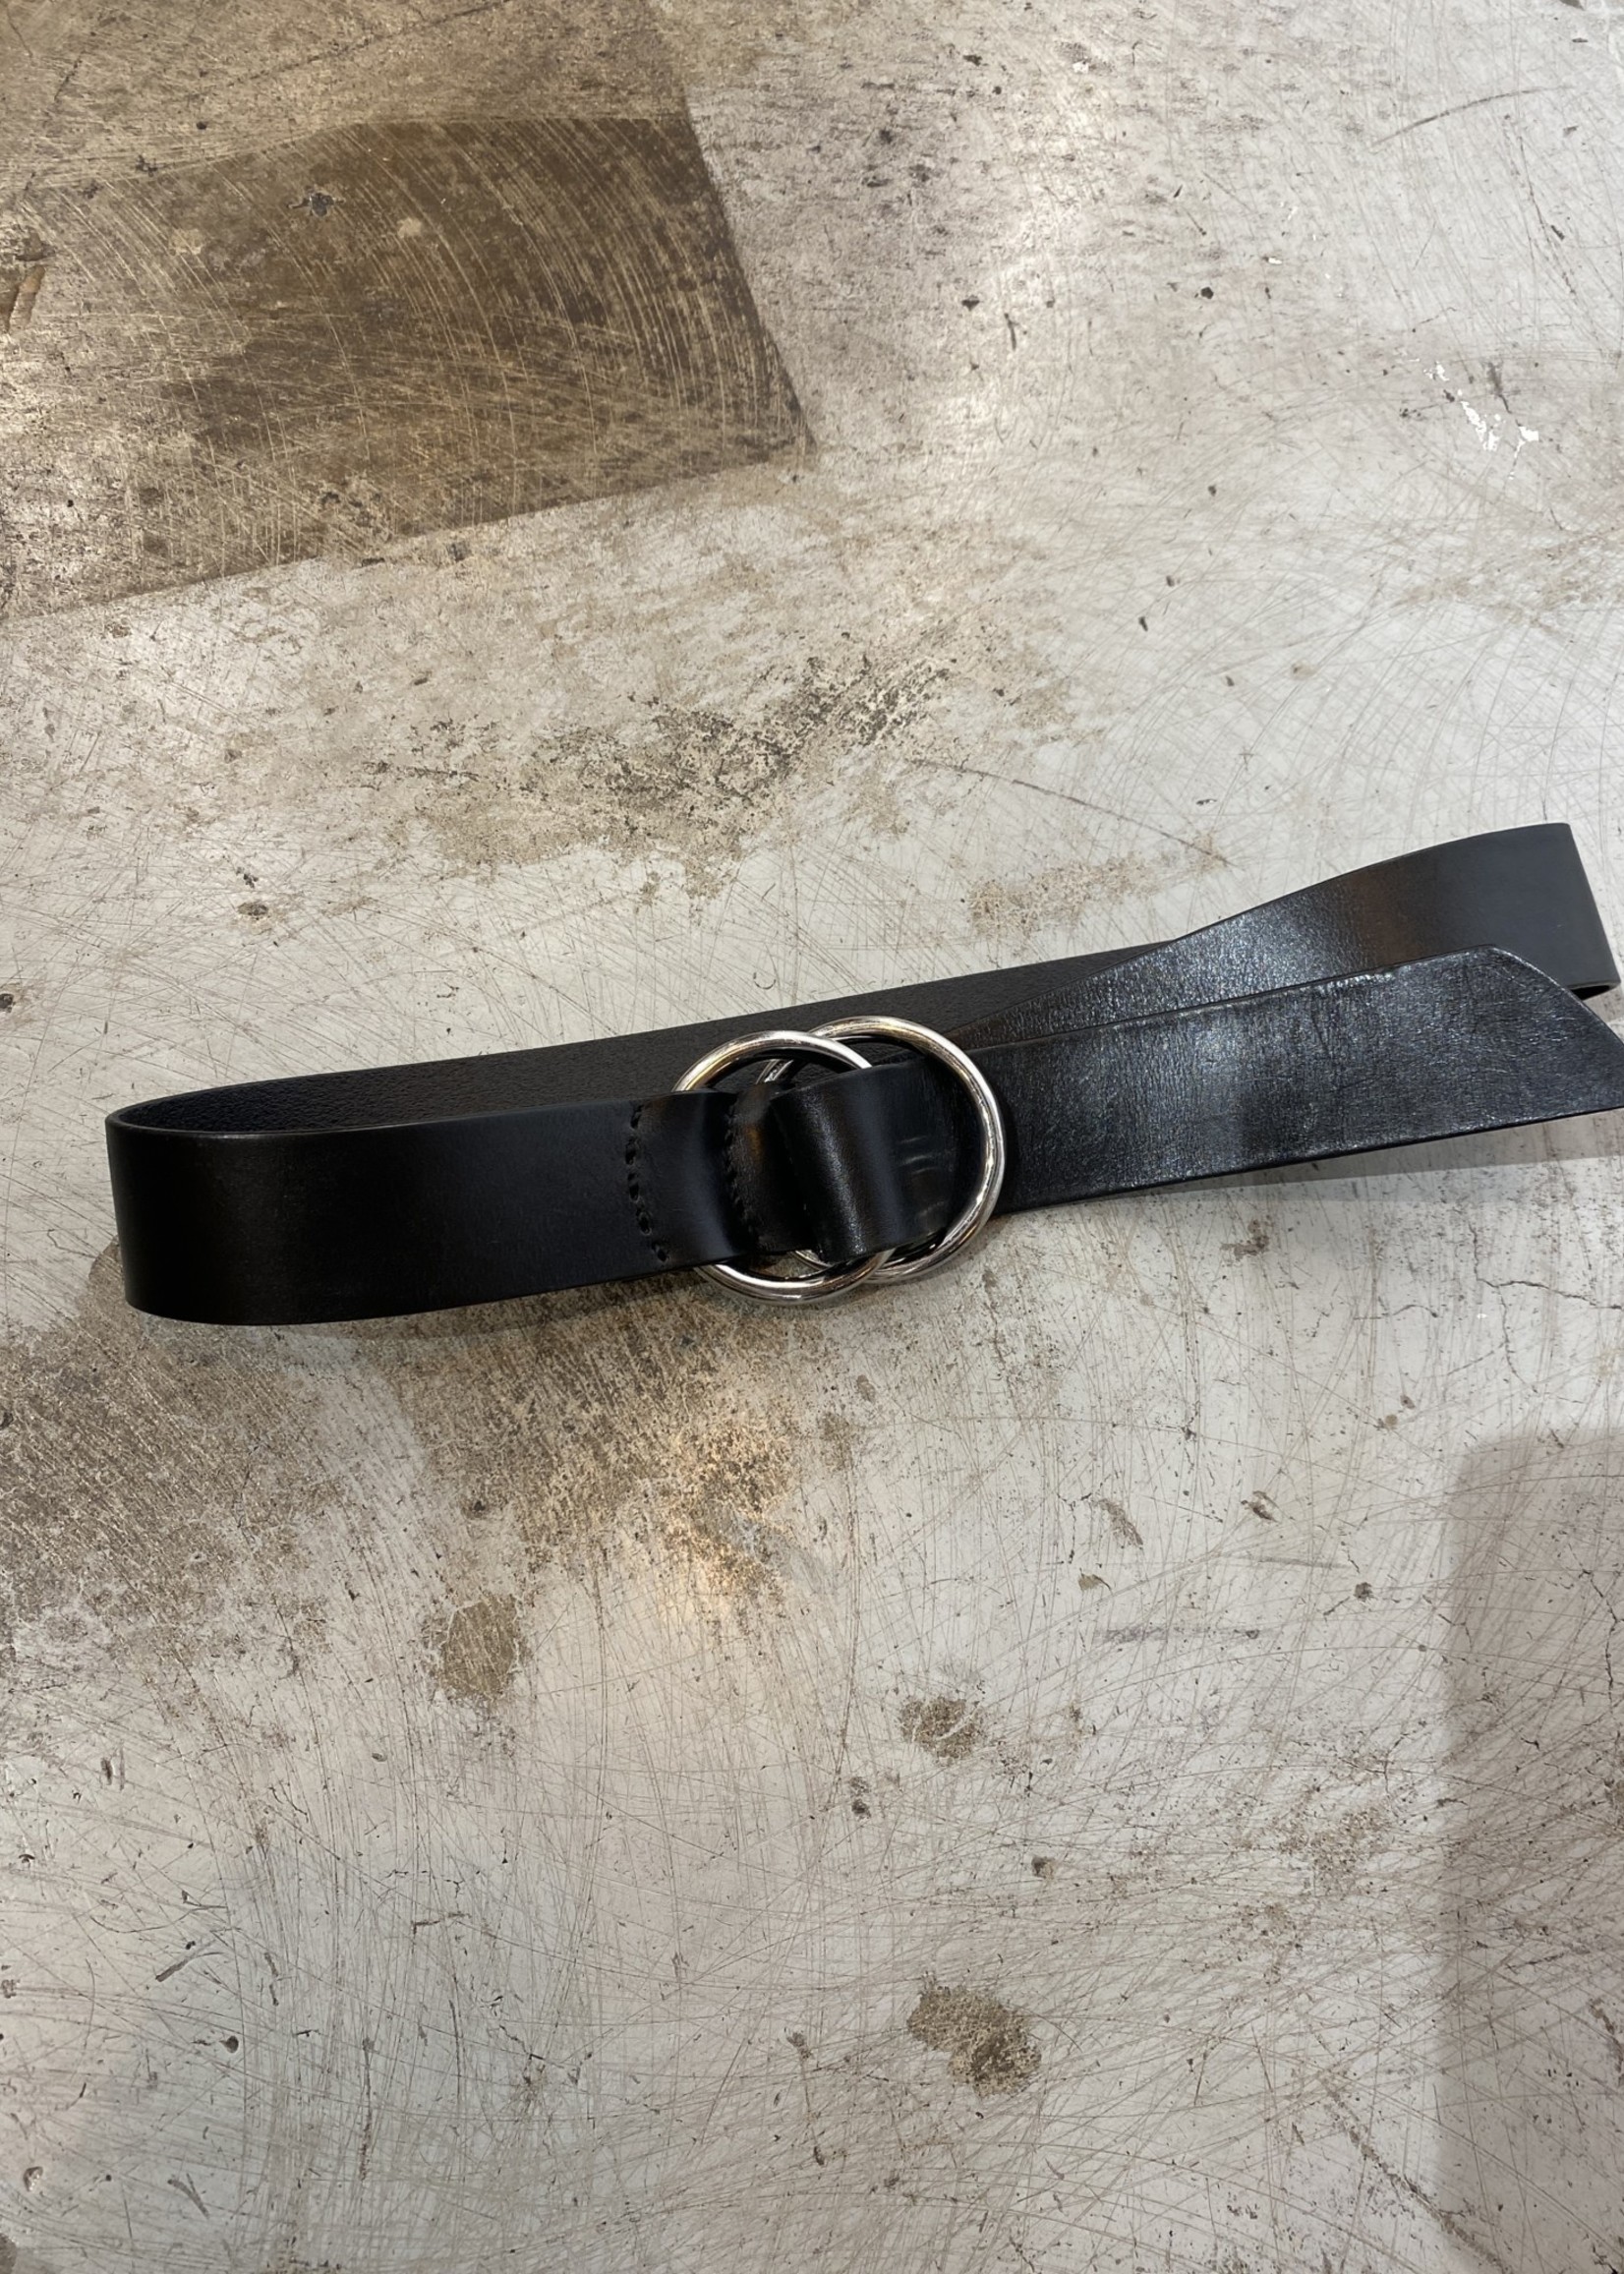 Gap Black Leather Belt S